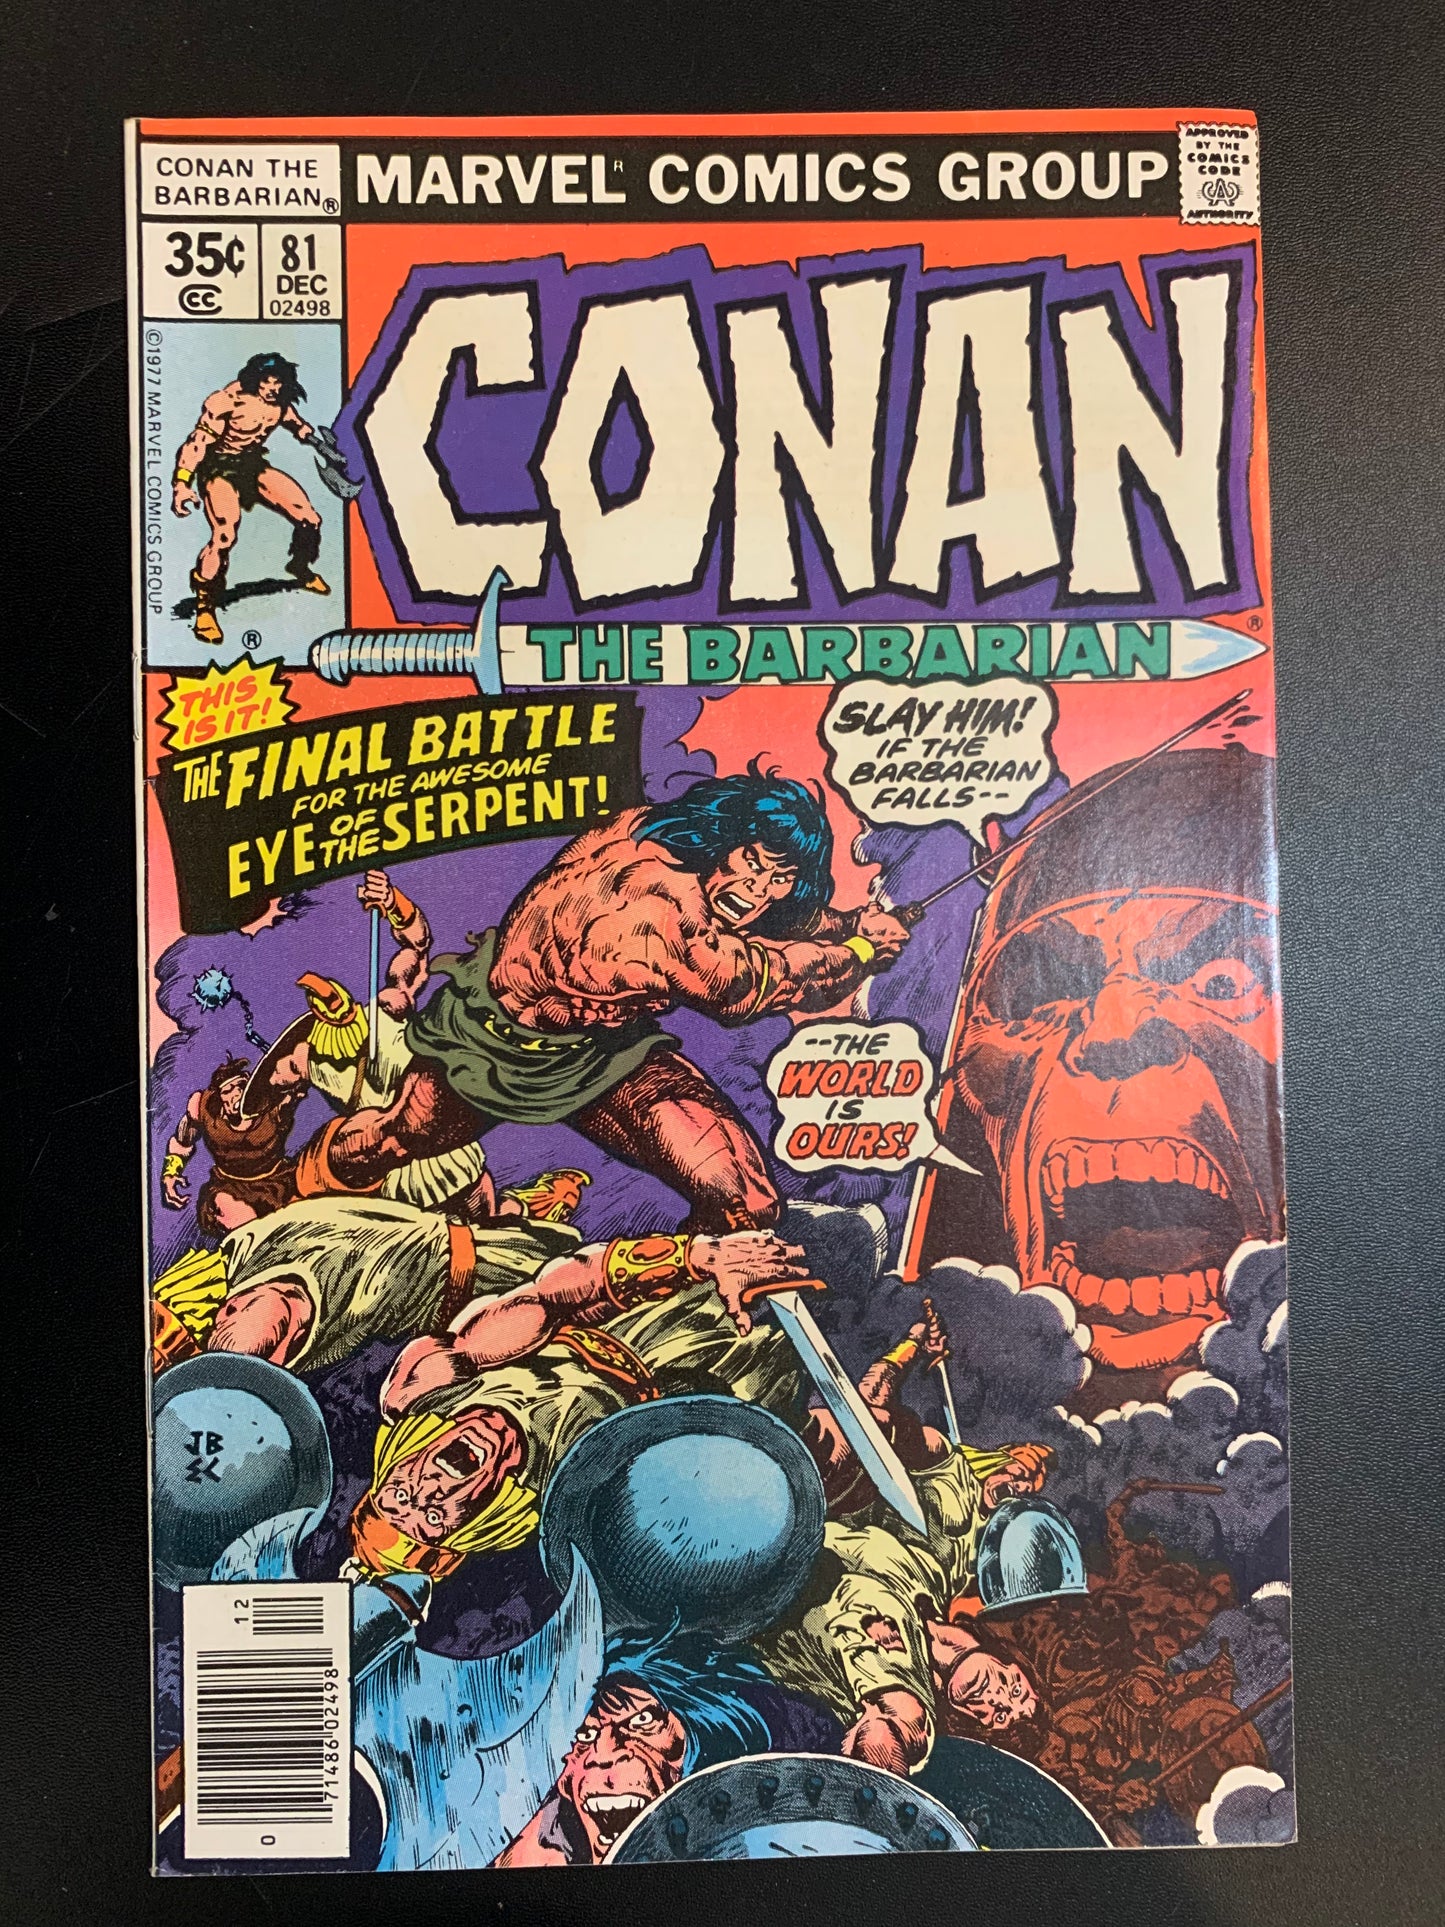 Conan the Barbarian #81